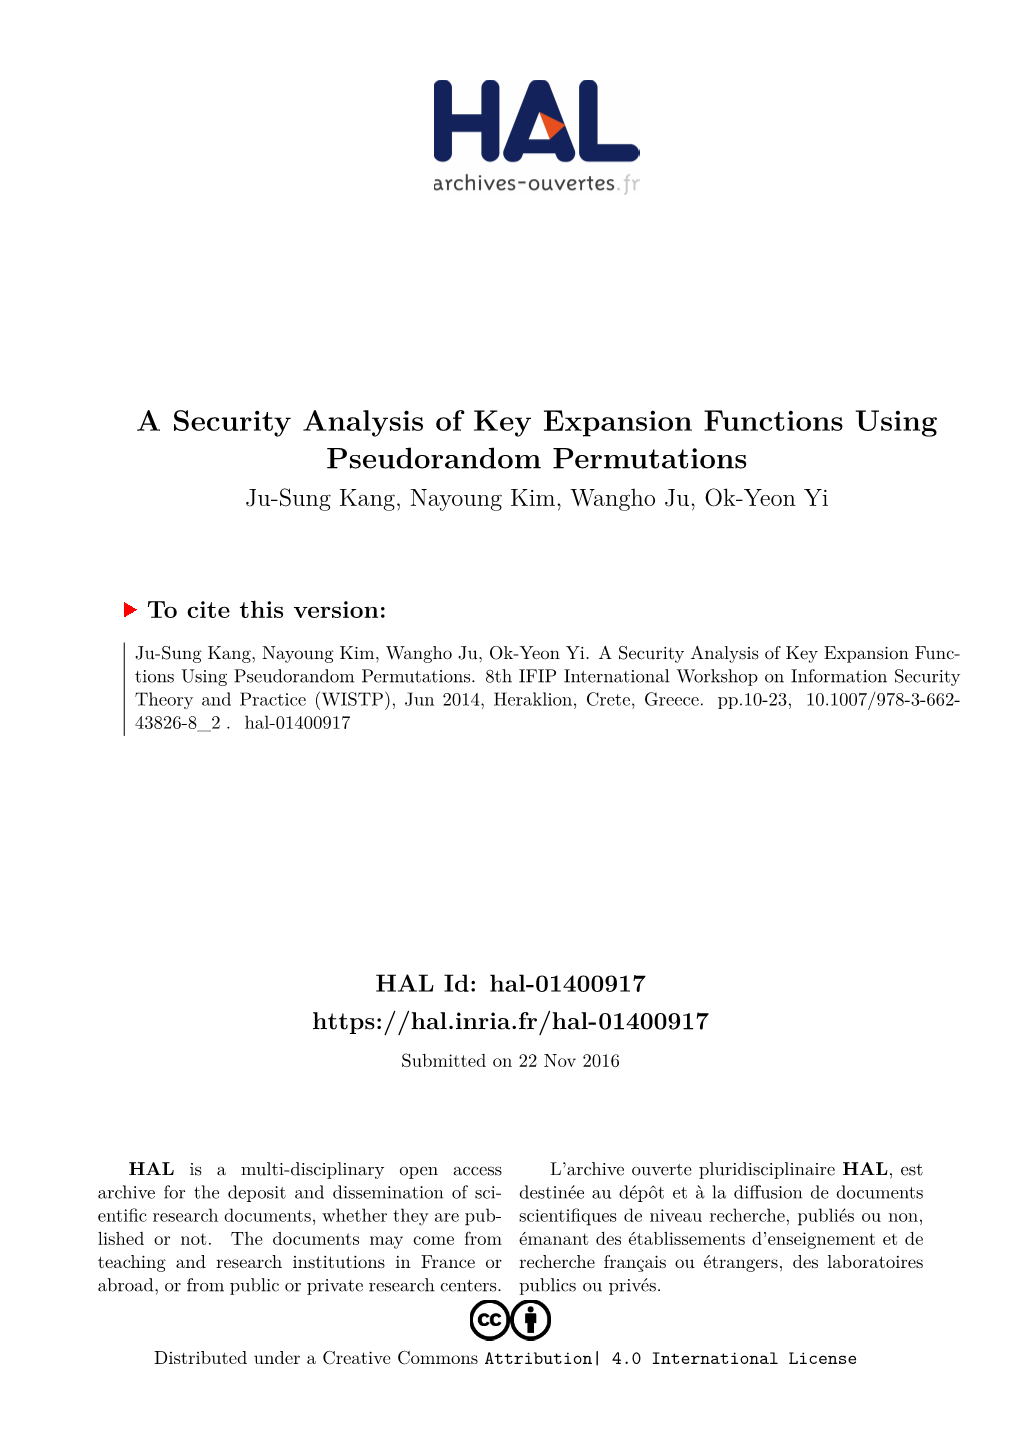 A Security Analysis of Key Expansion Functions Using Pseudorandom Permutations Ju-Sung Kang, Nayoung Kim, Wangho Ju, Ok-Yeon Yi